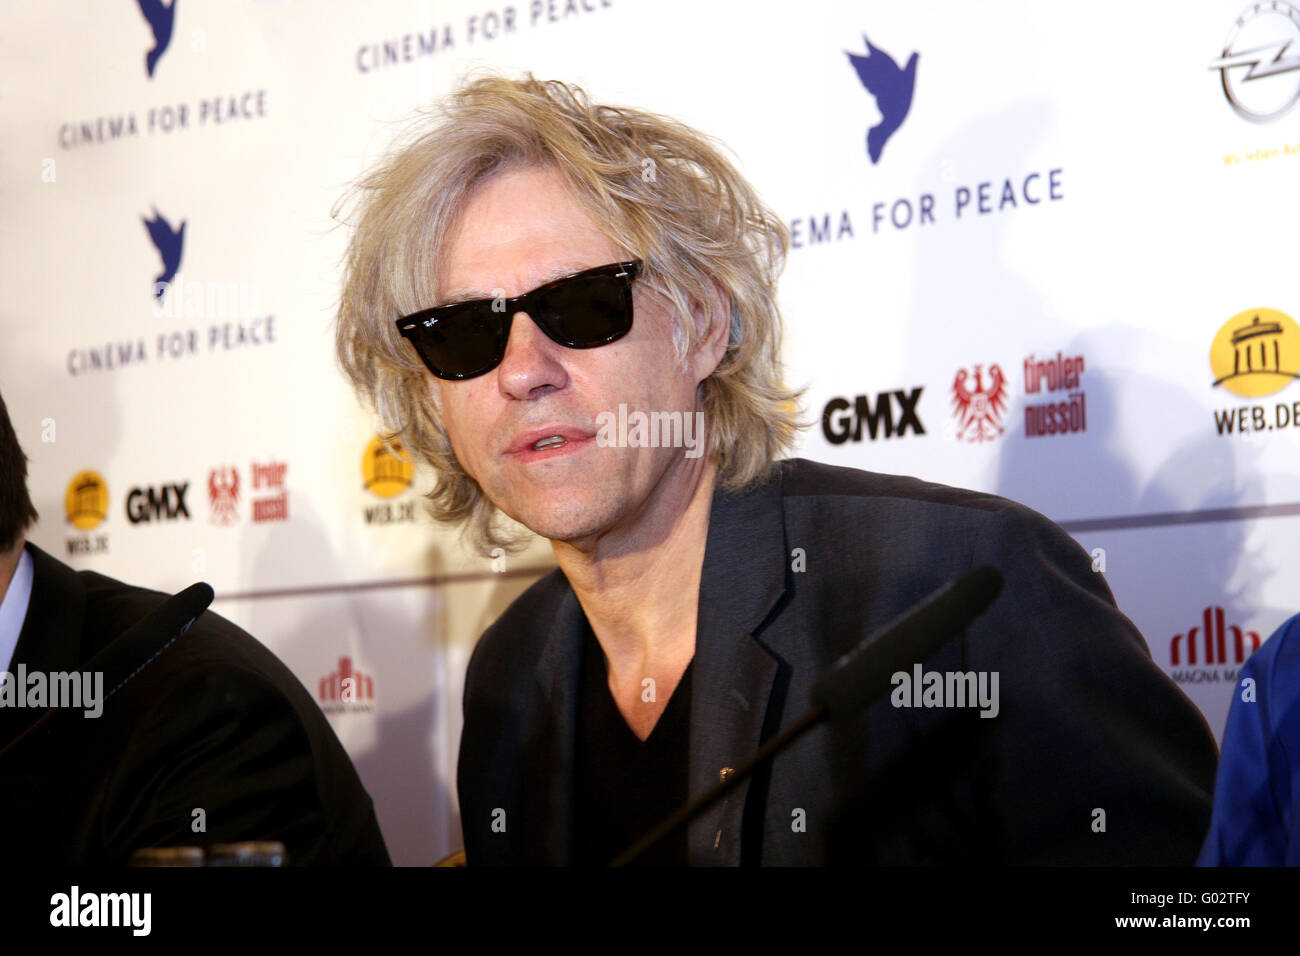 Bob Geldof-Cinema for Peace 2011 press conference Stock Photo